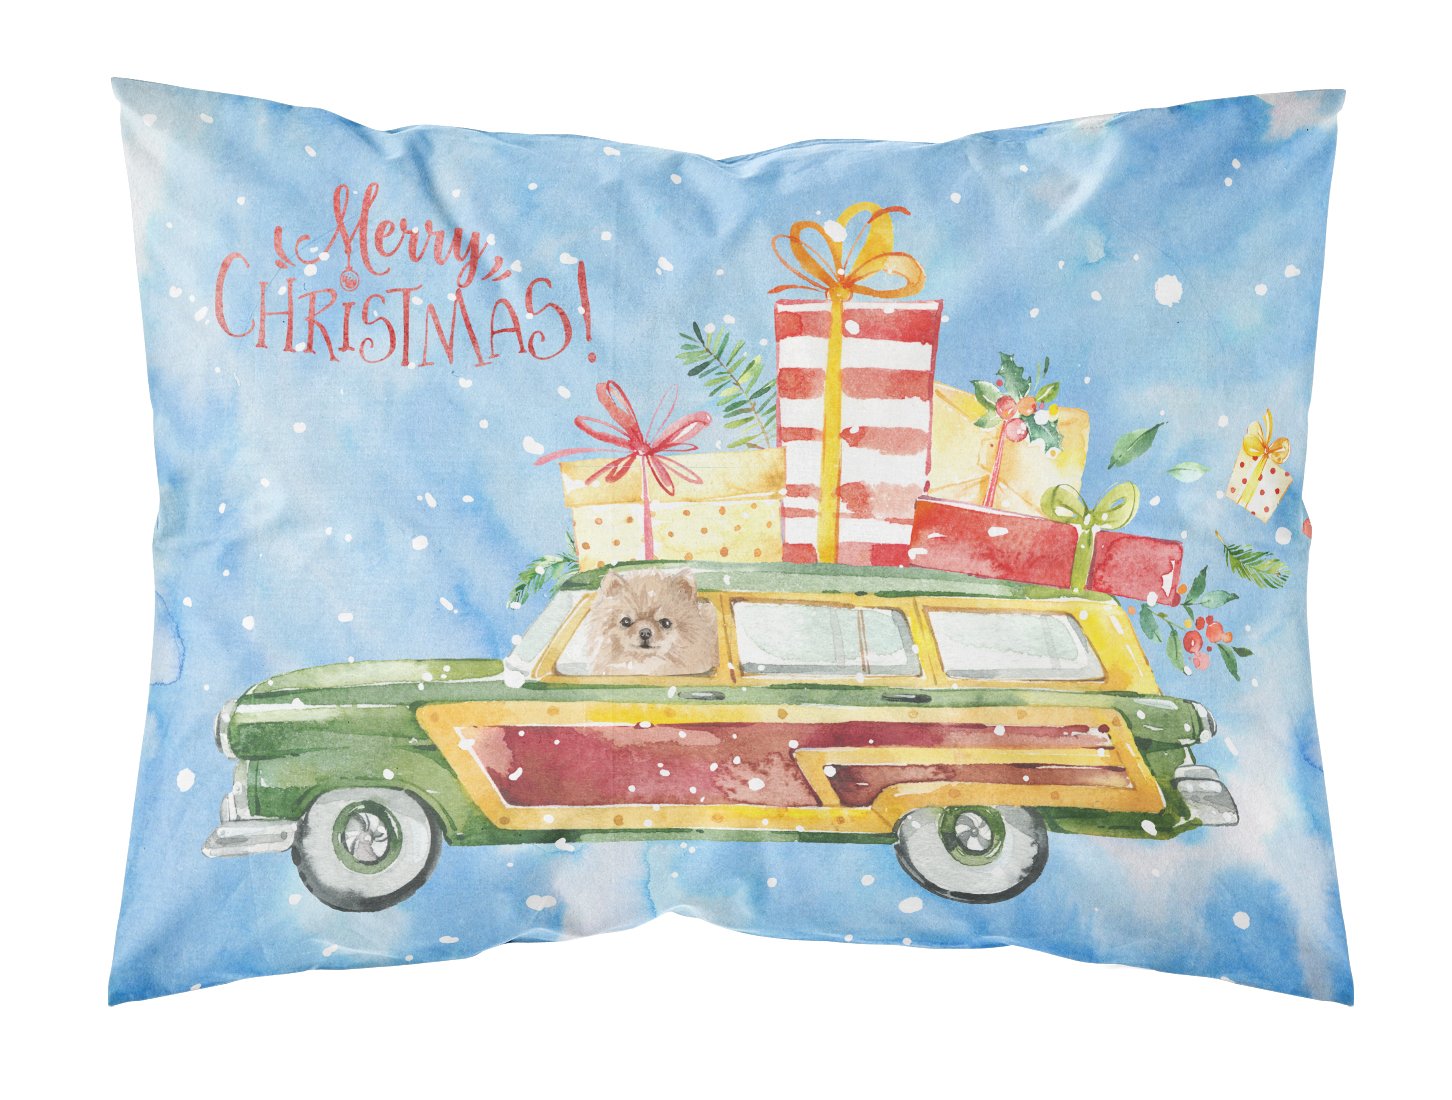 Merry Christmas Pomeranian Fabric Standard Pillowcase CK2462PILLOWCASE by Caroline's Treasures